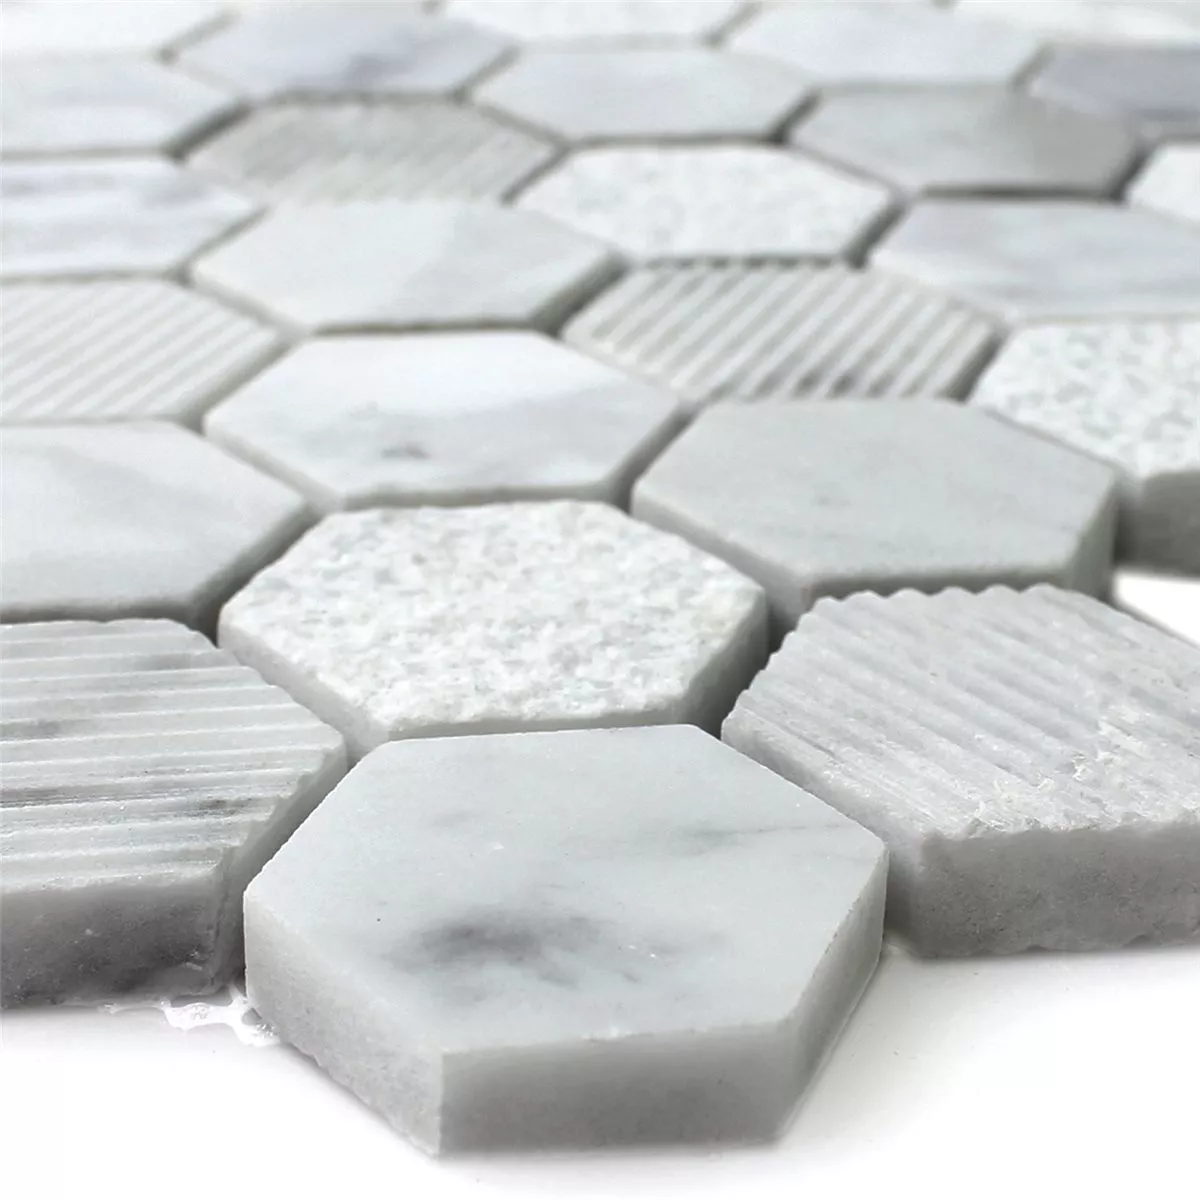 Sample Mosaic Tiles Hexagon Natural Stone Carrara White